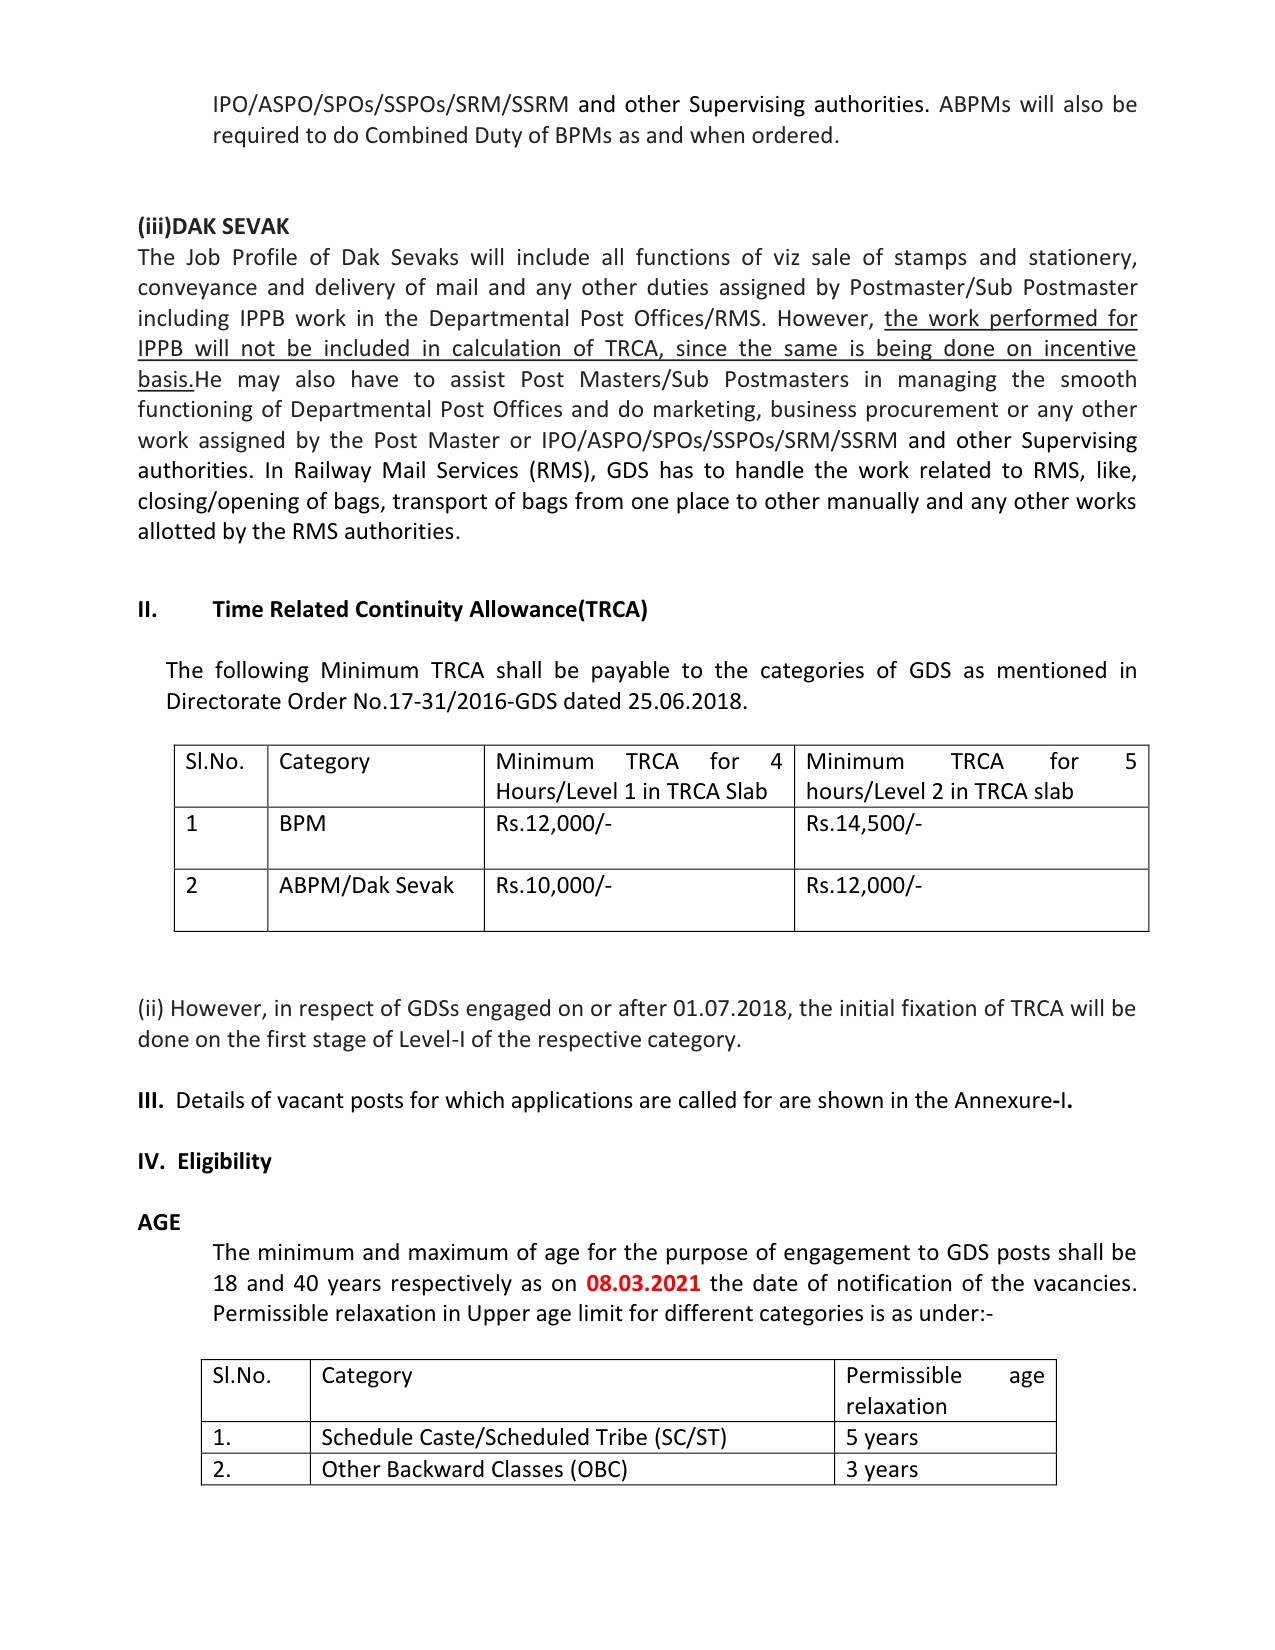 Kerala Postal Circle GDS Recruitment 2021 notification - Notification Image 2